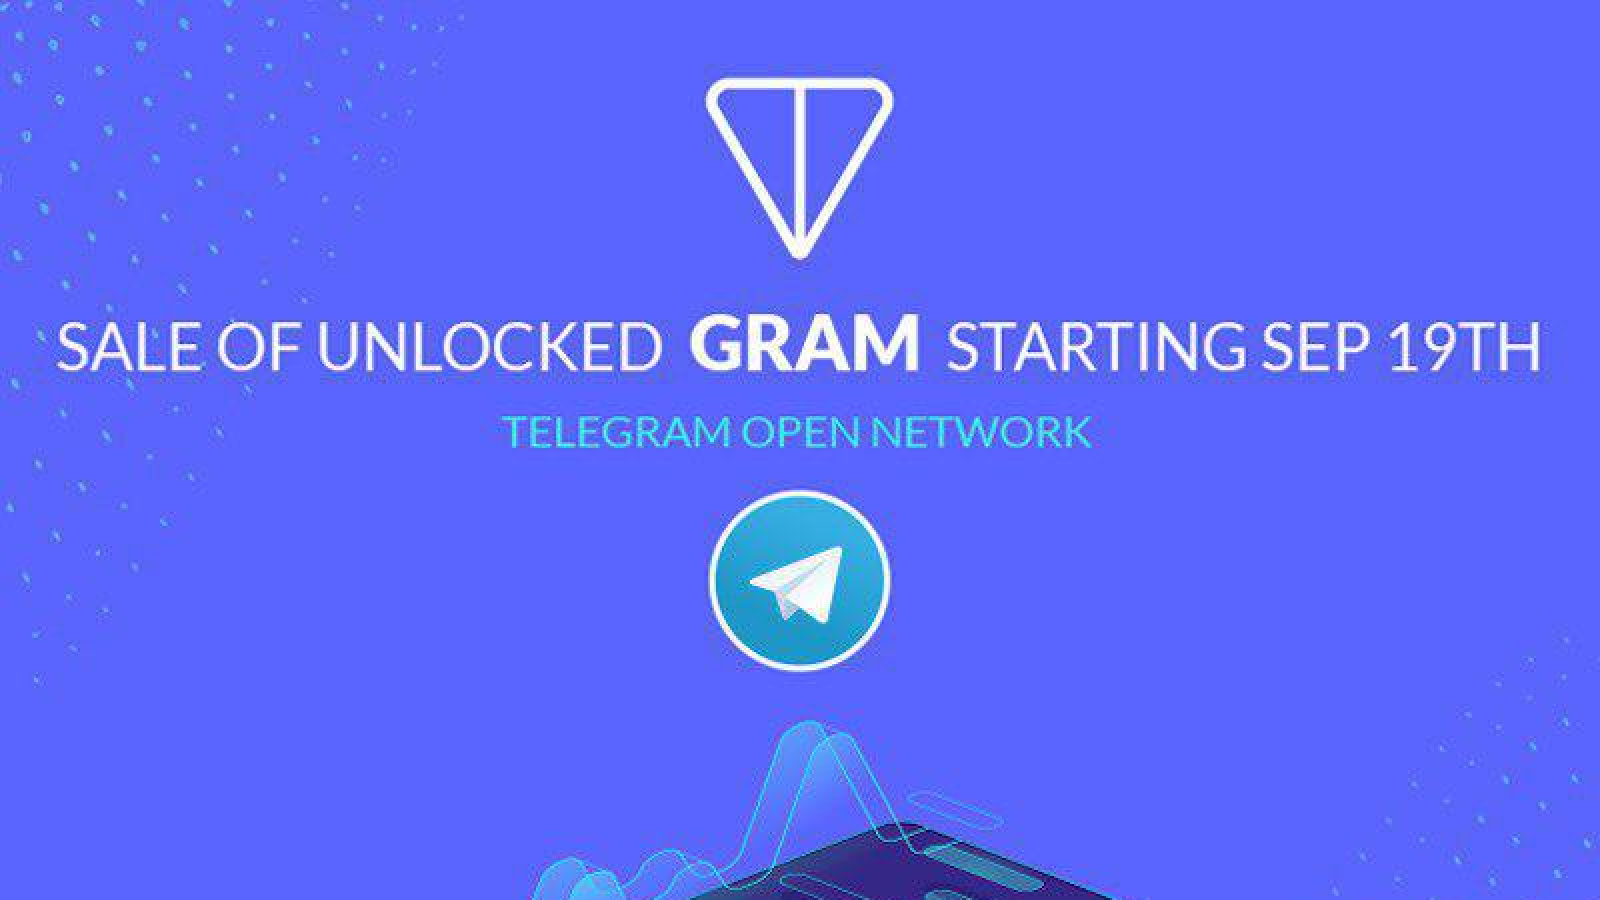 ATAIX Brings Telegram’s Unlocked Gram Tokens to the Public